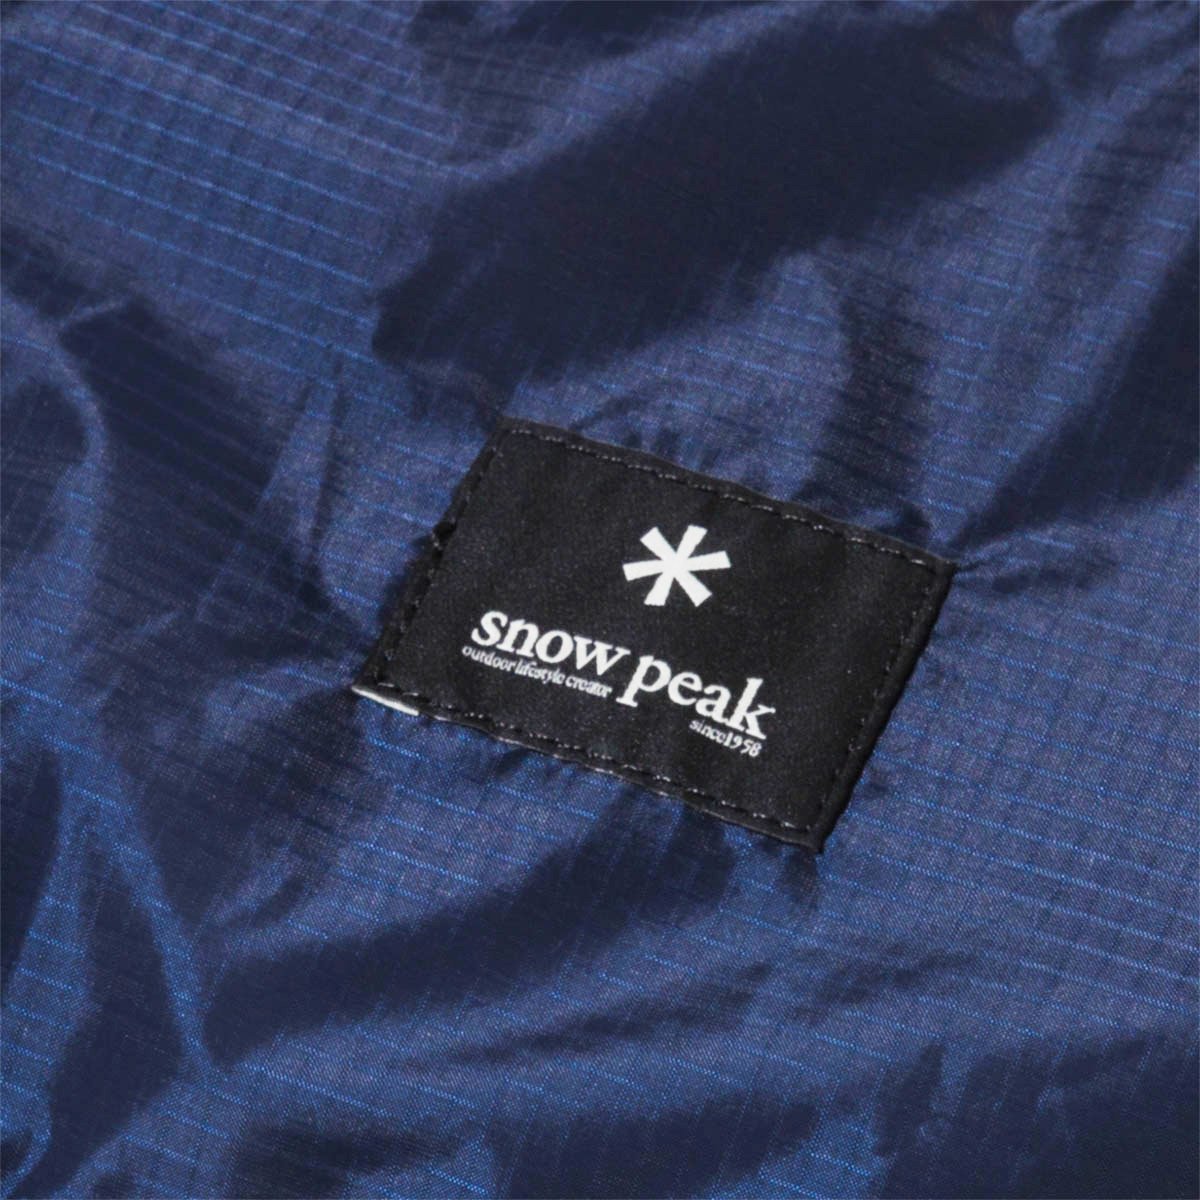 Snow Peak Bags & Accessories NAVY / O/S POCKETABLE TOTE BAG TYPE01